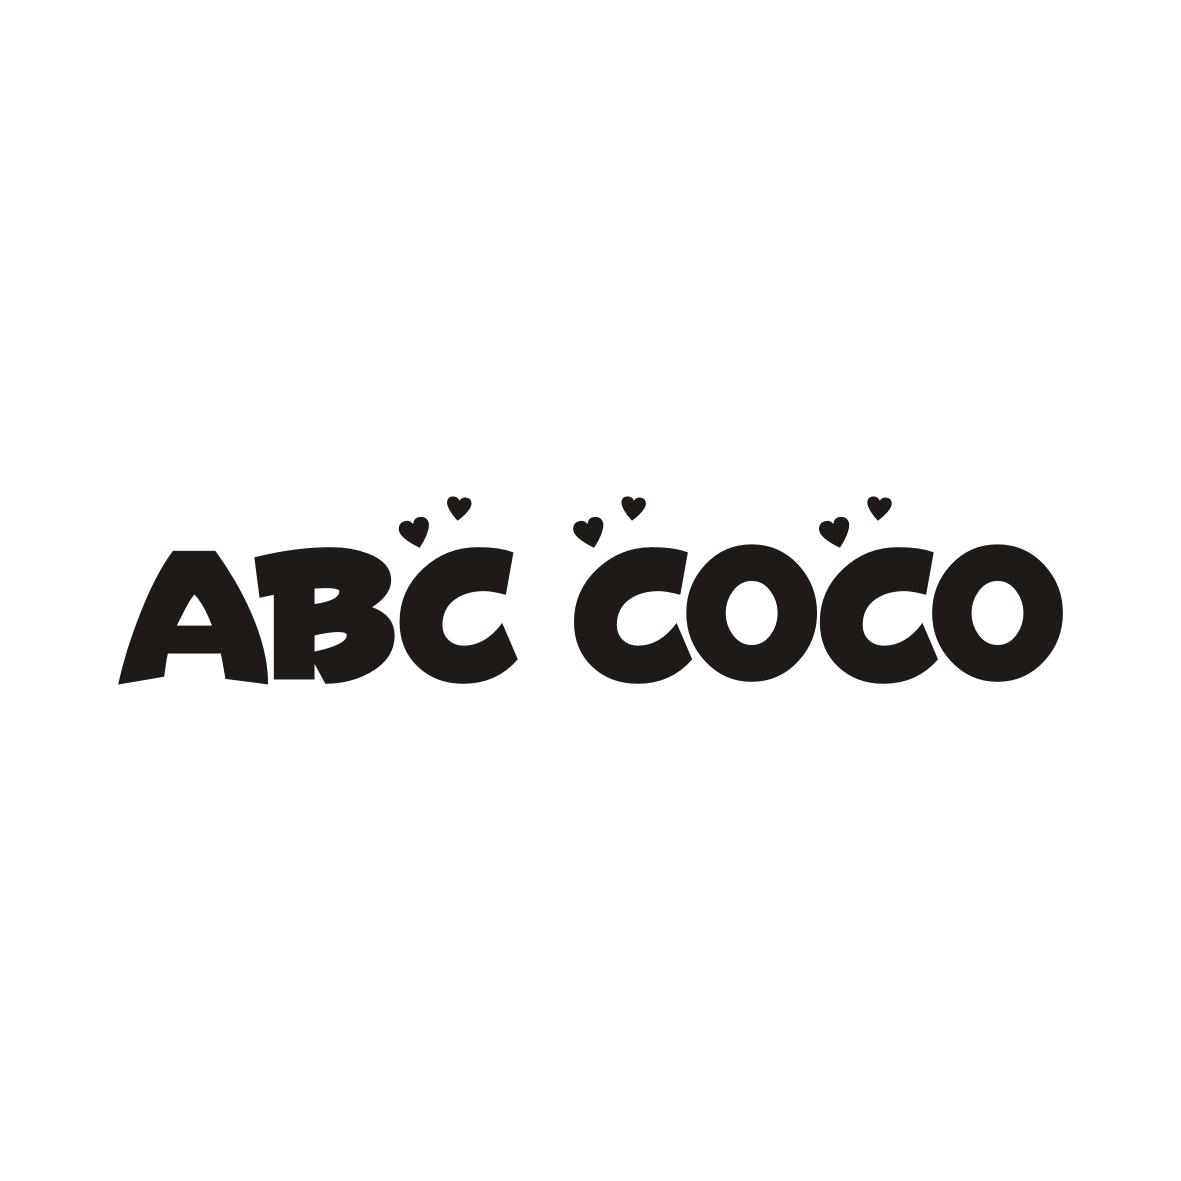 ABC COCO大积木商标转让费用买卖交易流程